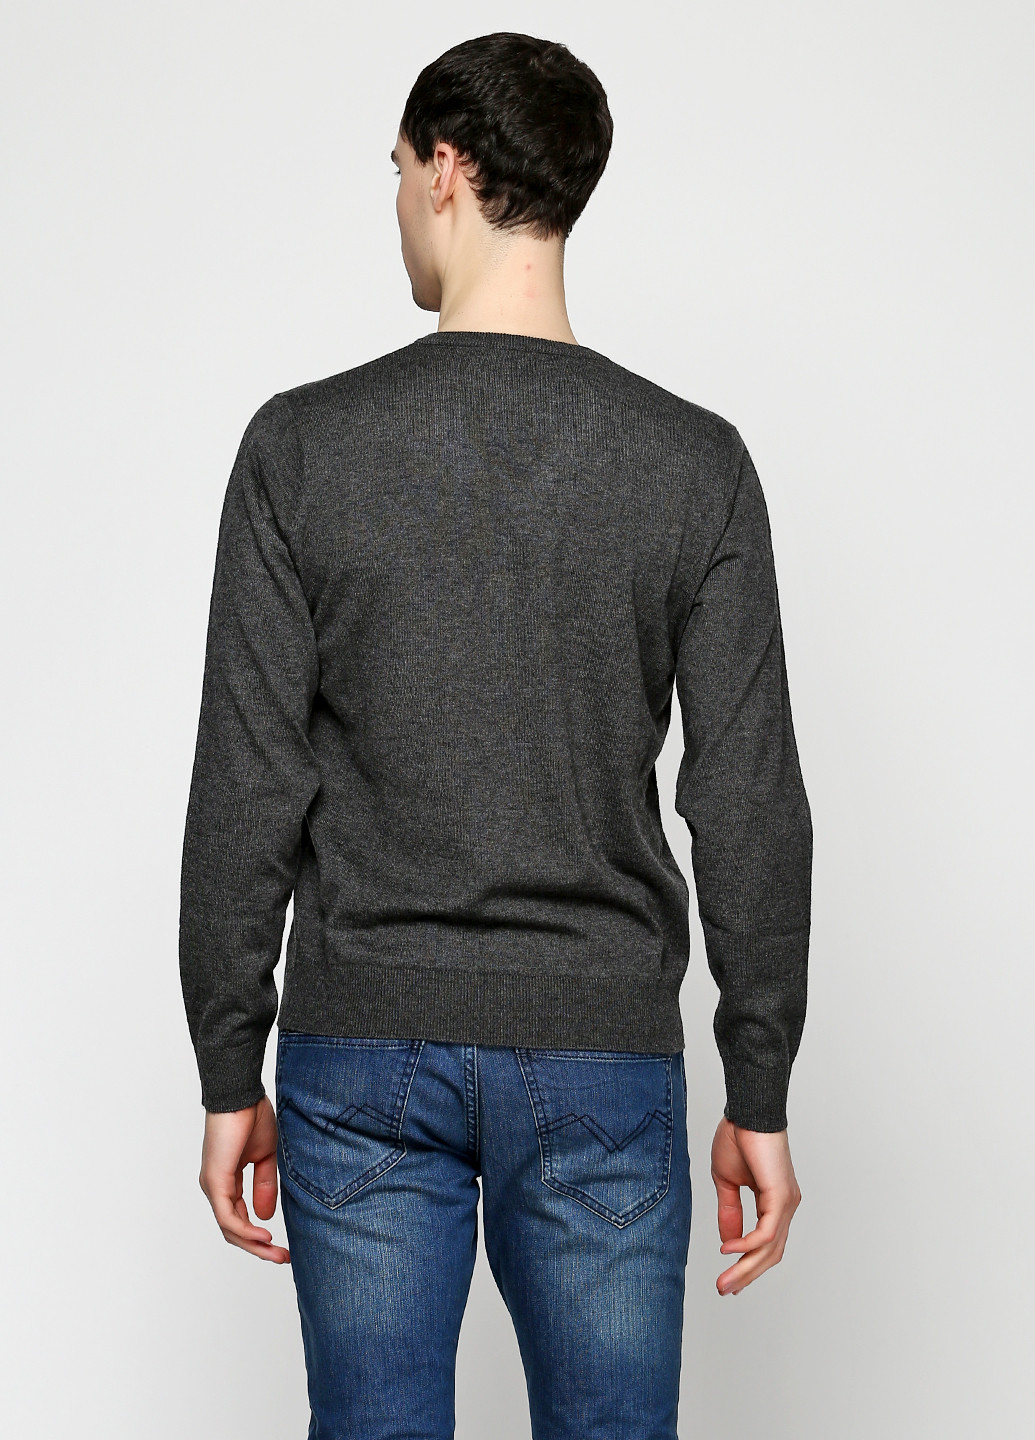 Серый демисезонный пуловер пуловер Pierre Balmain